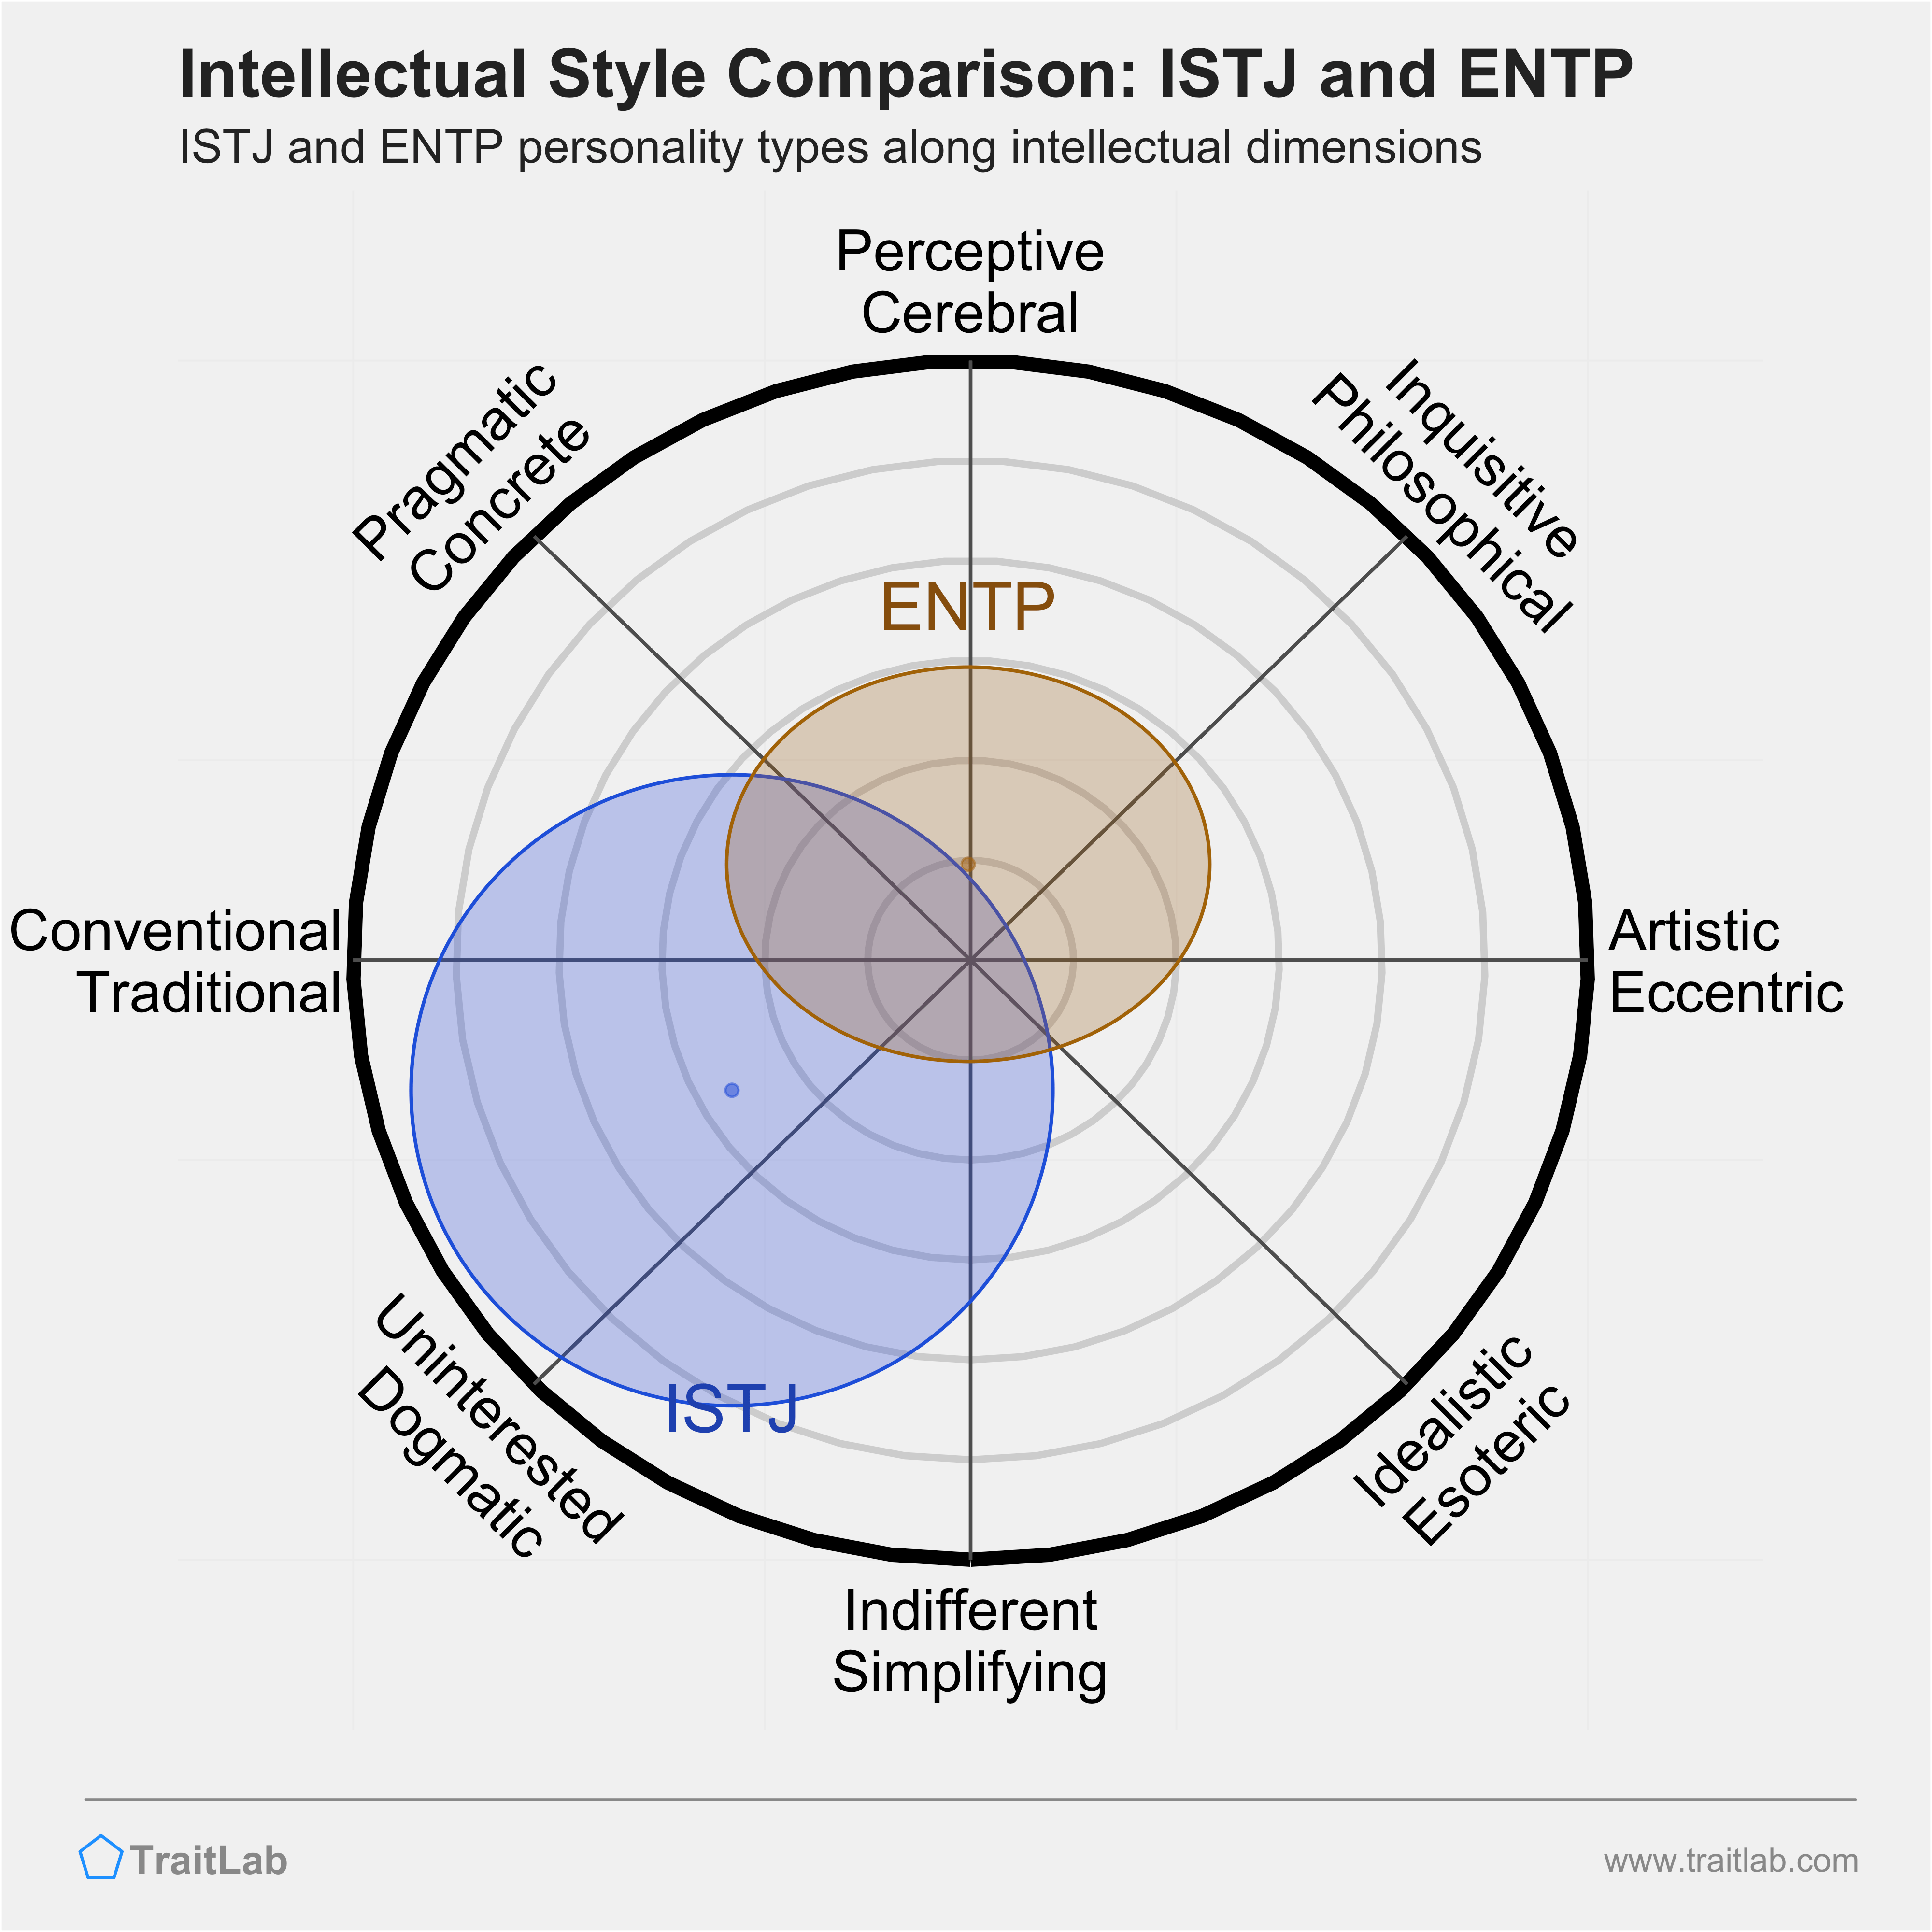 ISTJ and ENTP comparison across intellectual dimensions